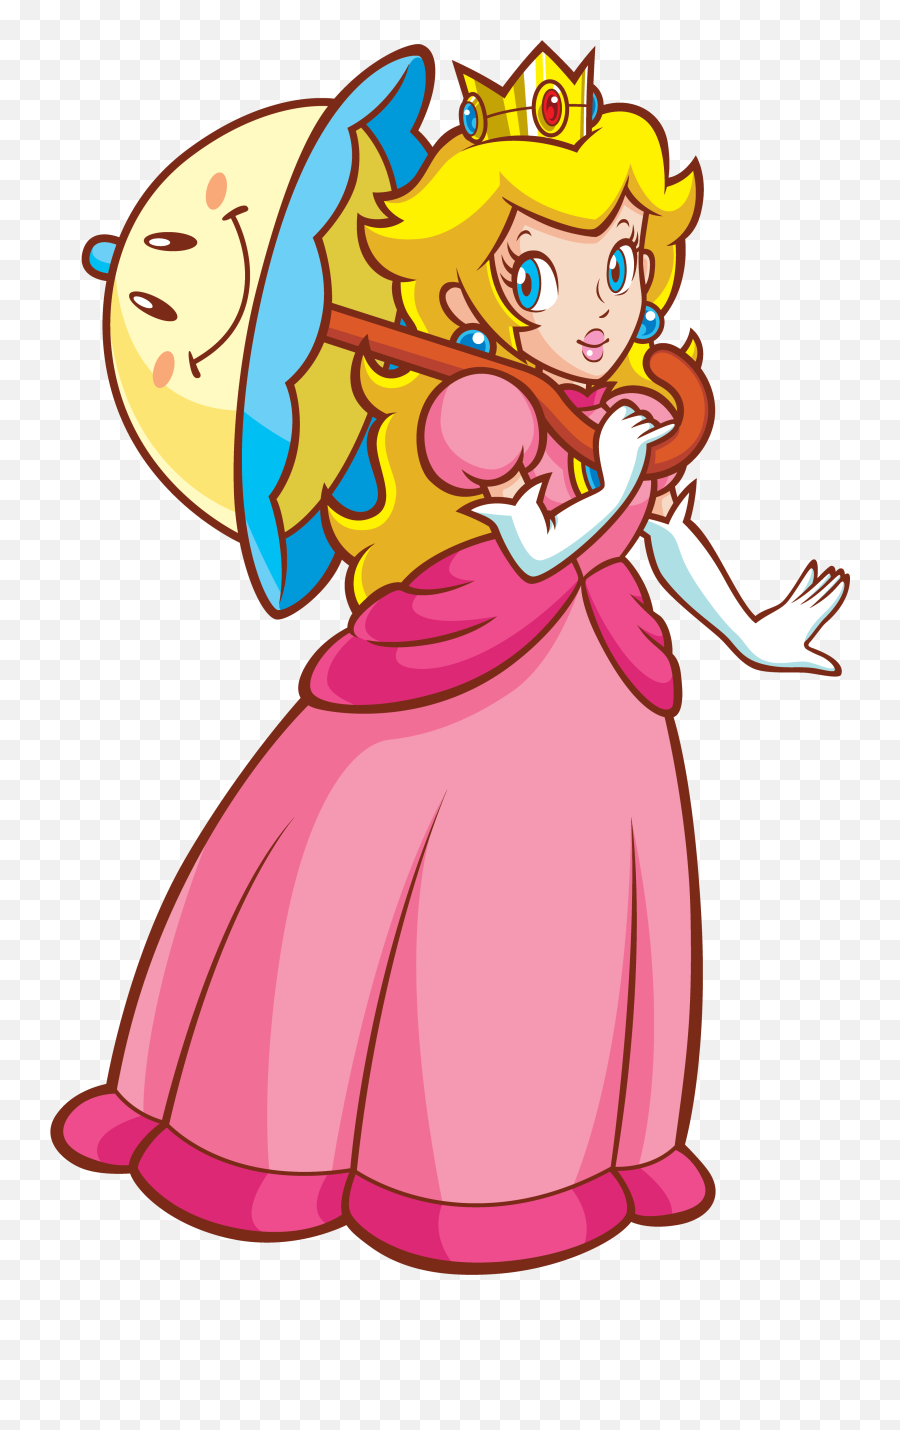 Princess Peach Image - Super Princess Peach Png,Princess Peach Png